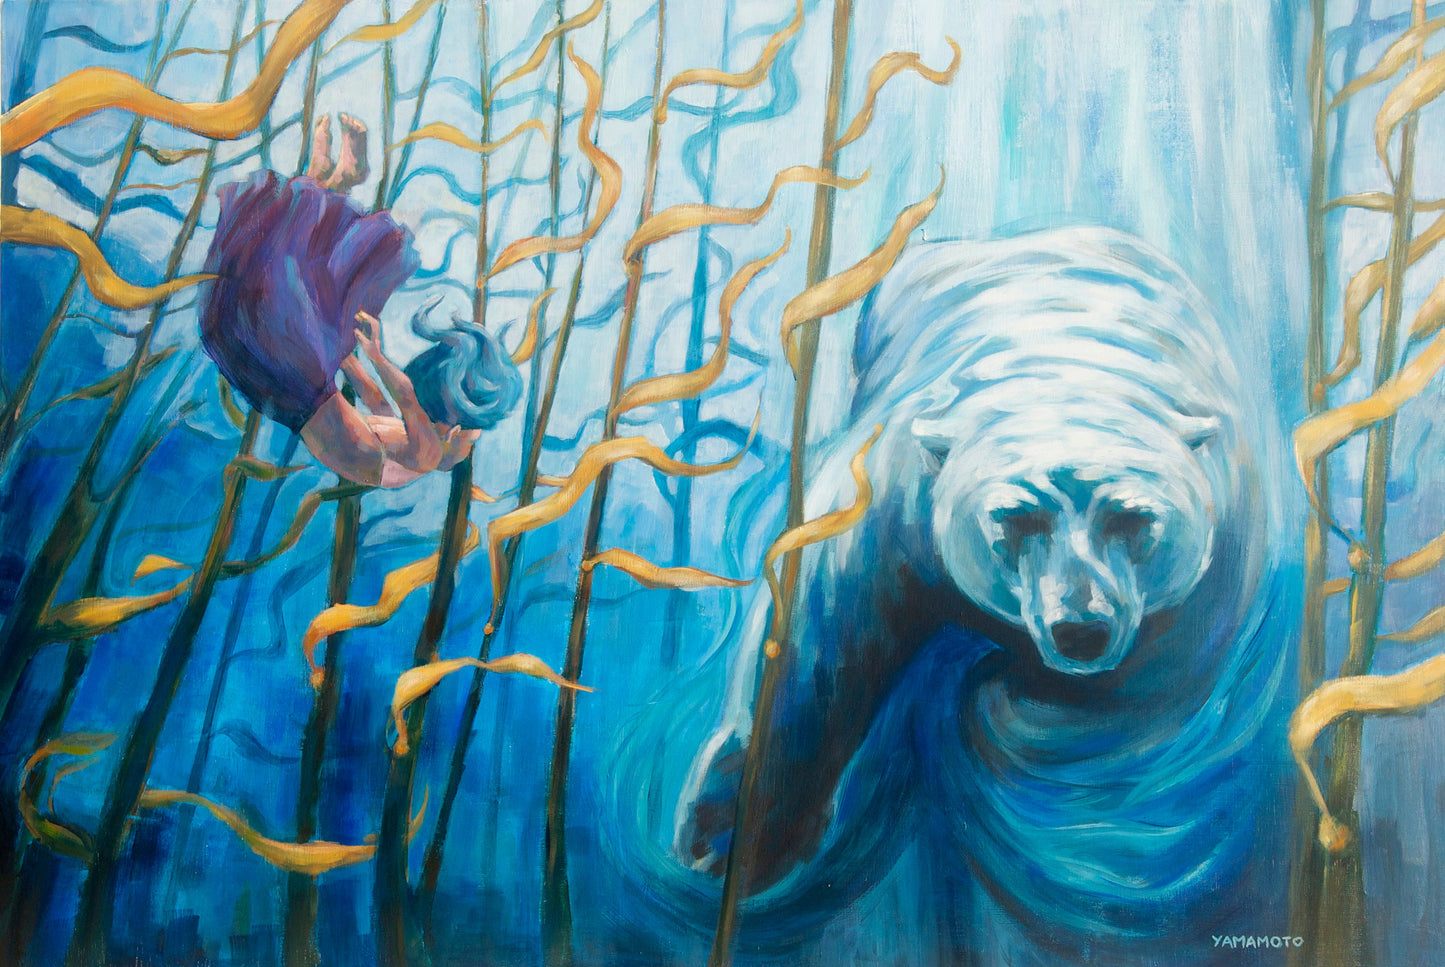 Arctic Poem - Polar bear ocean art